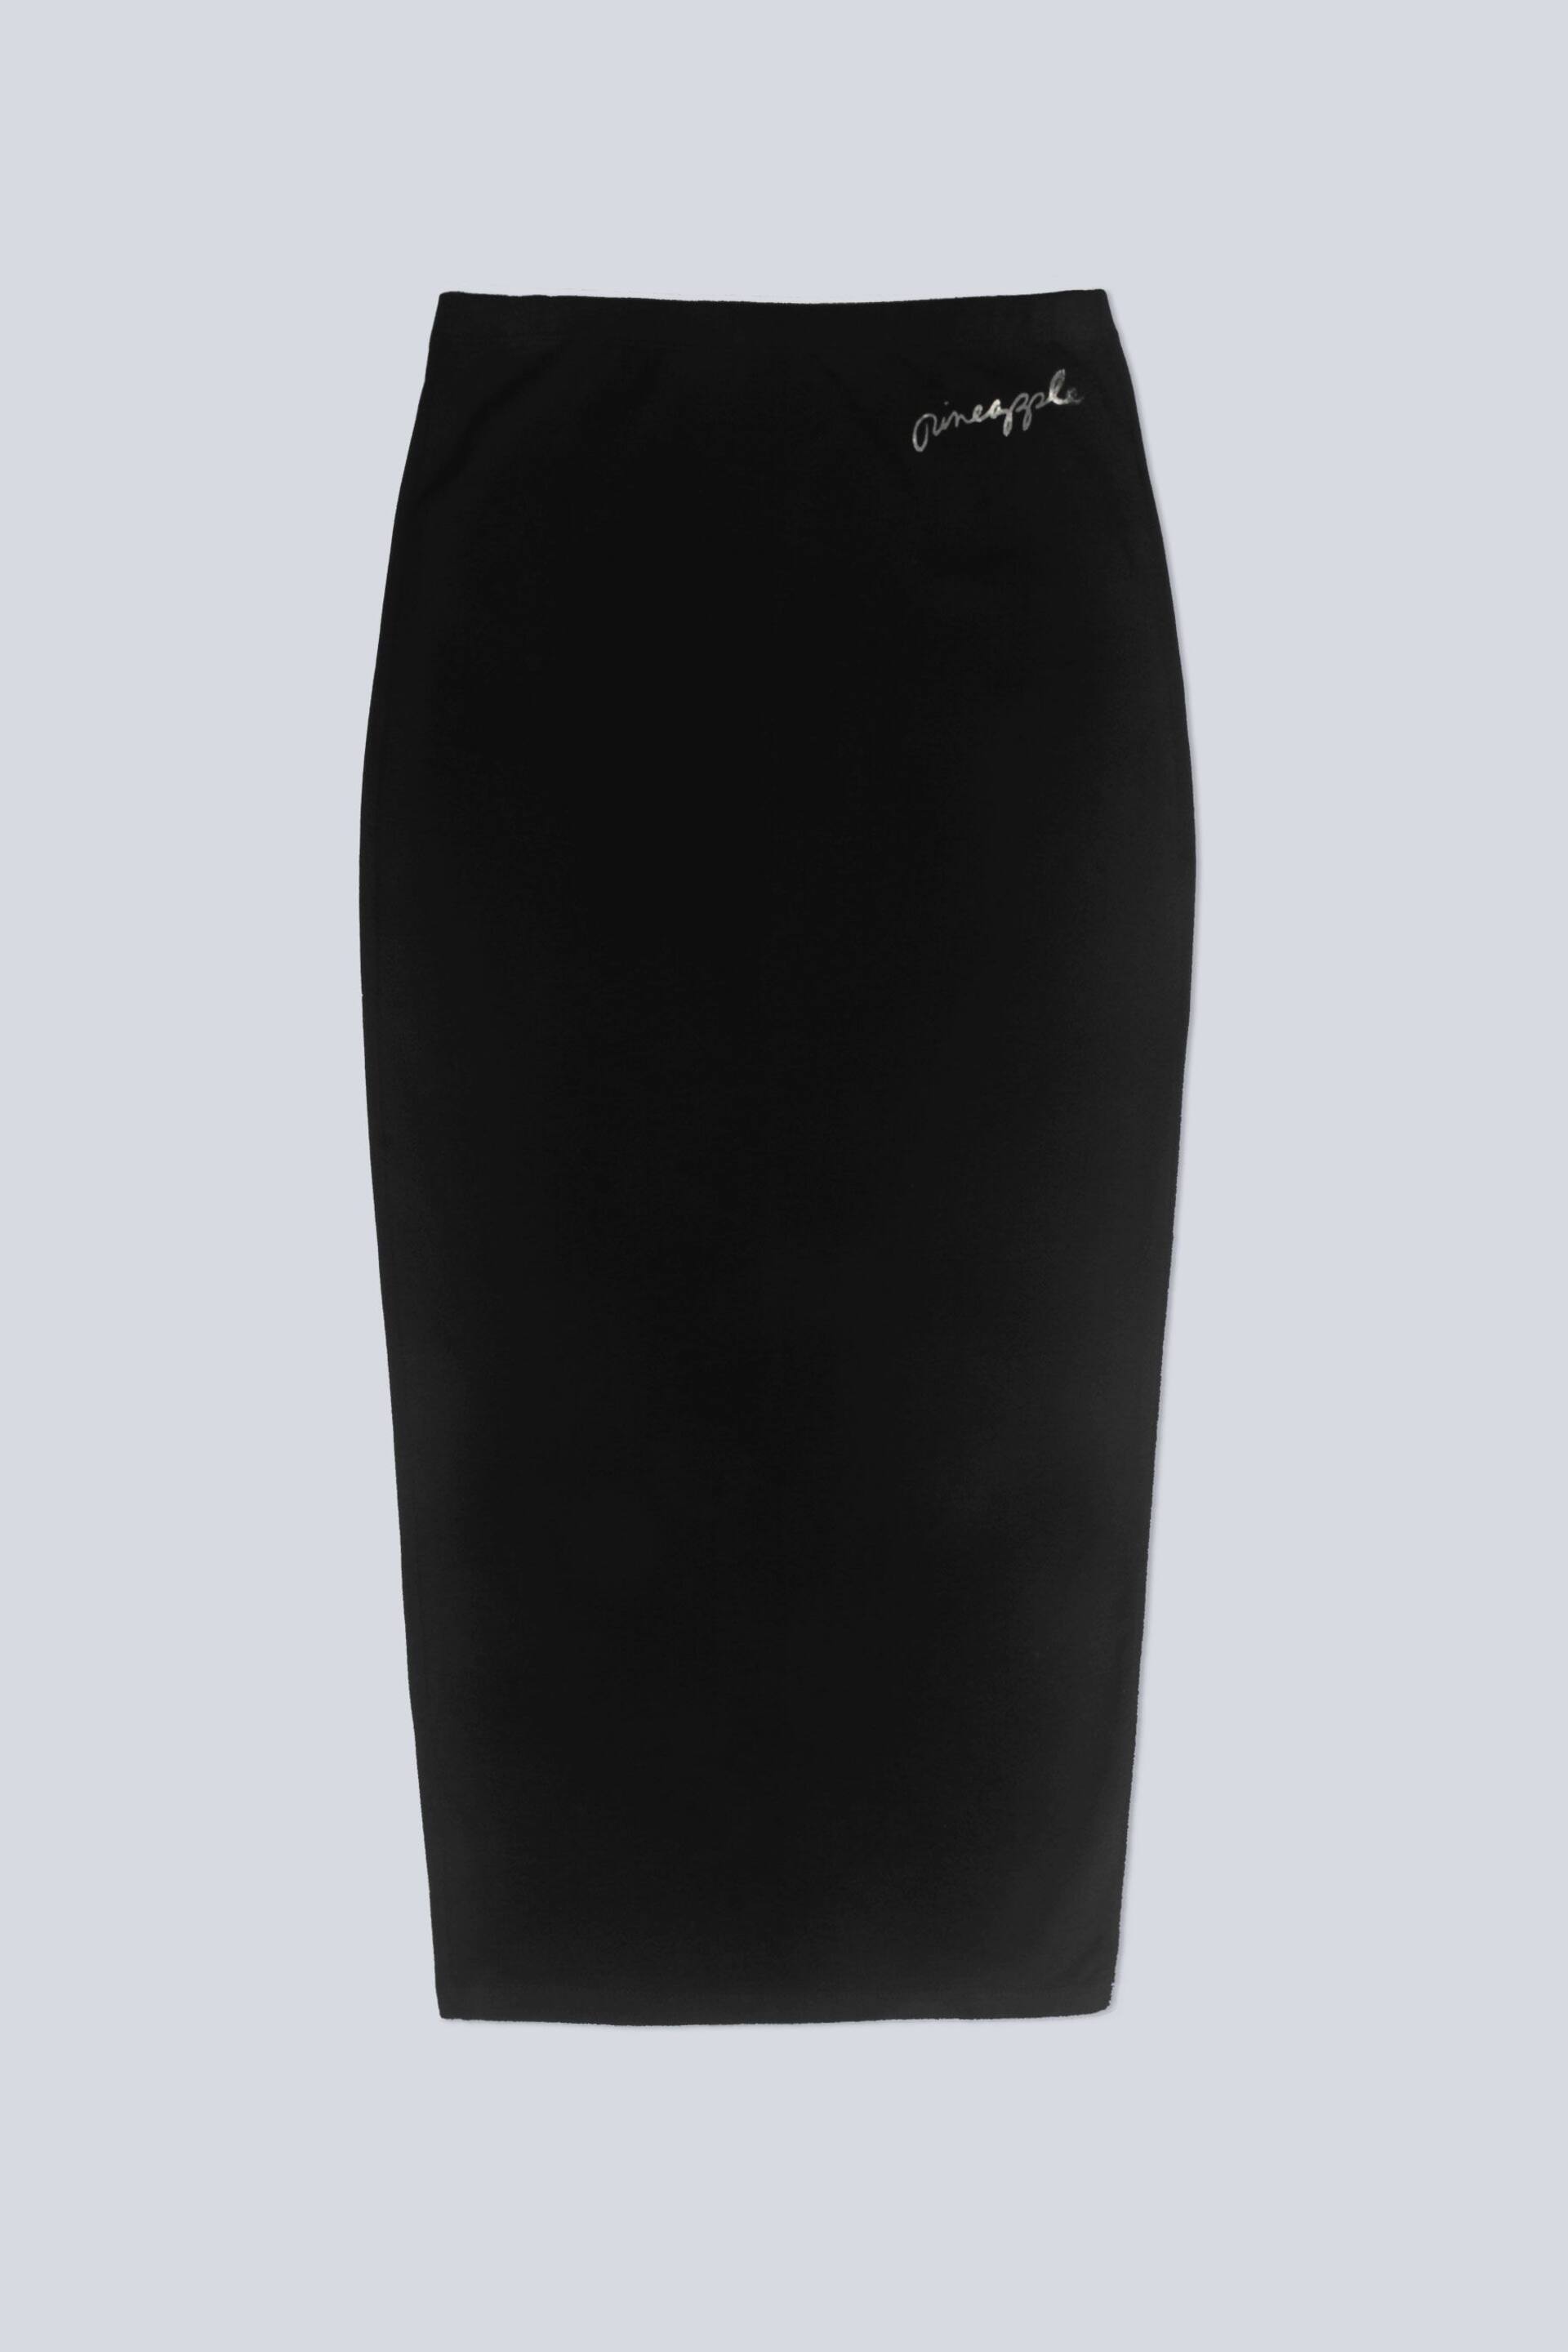 Pineapple Black Midi High Waist Womens Jersey Skirt - Image 5 of 5